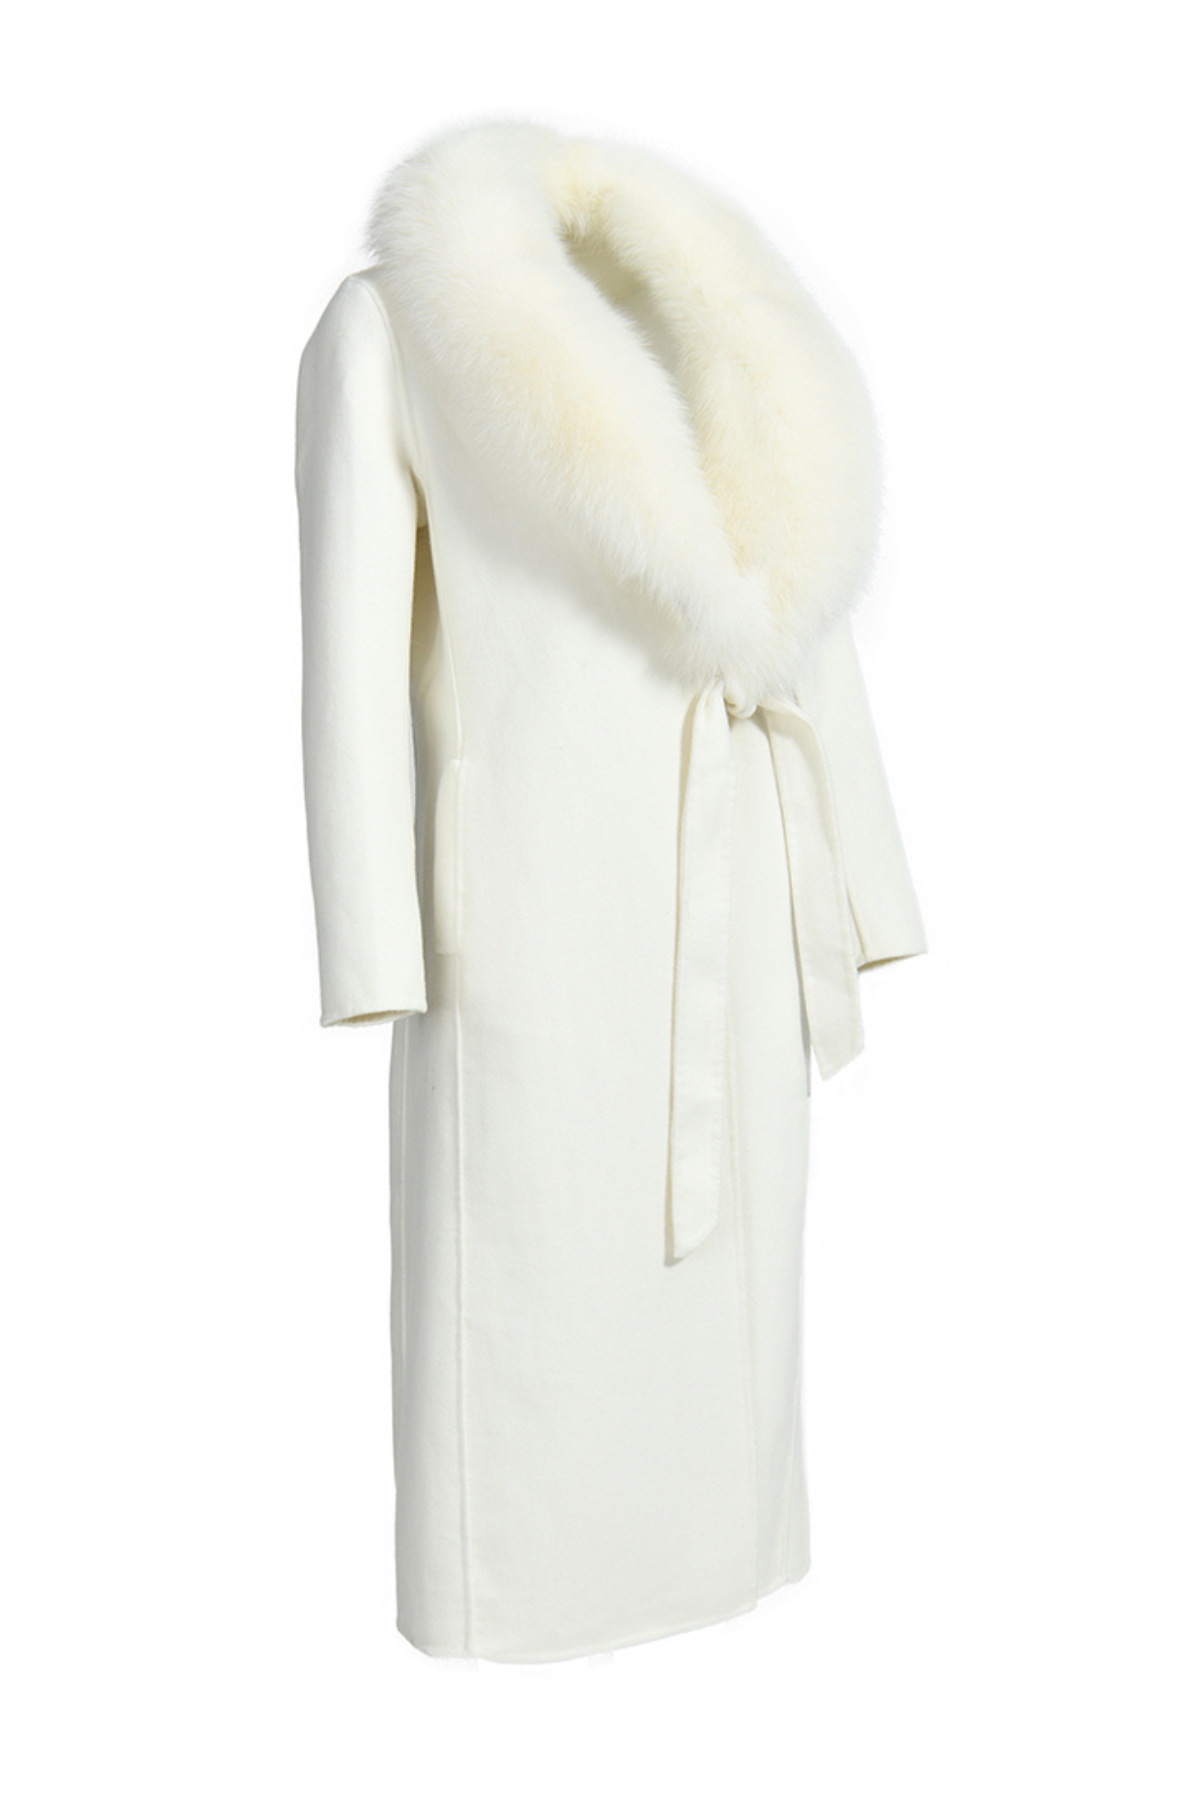 Windsor Cashmere Coat White